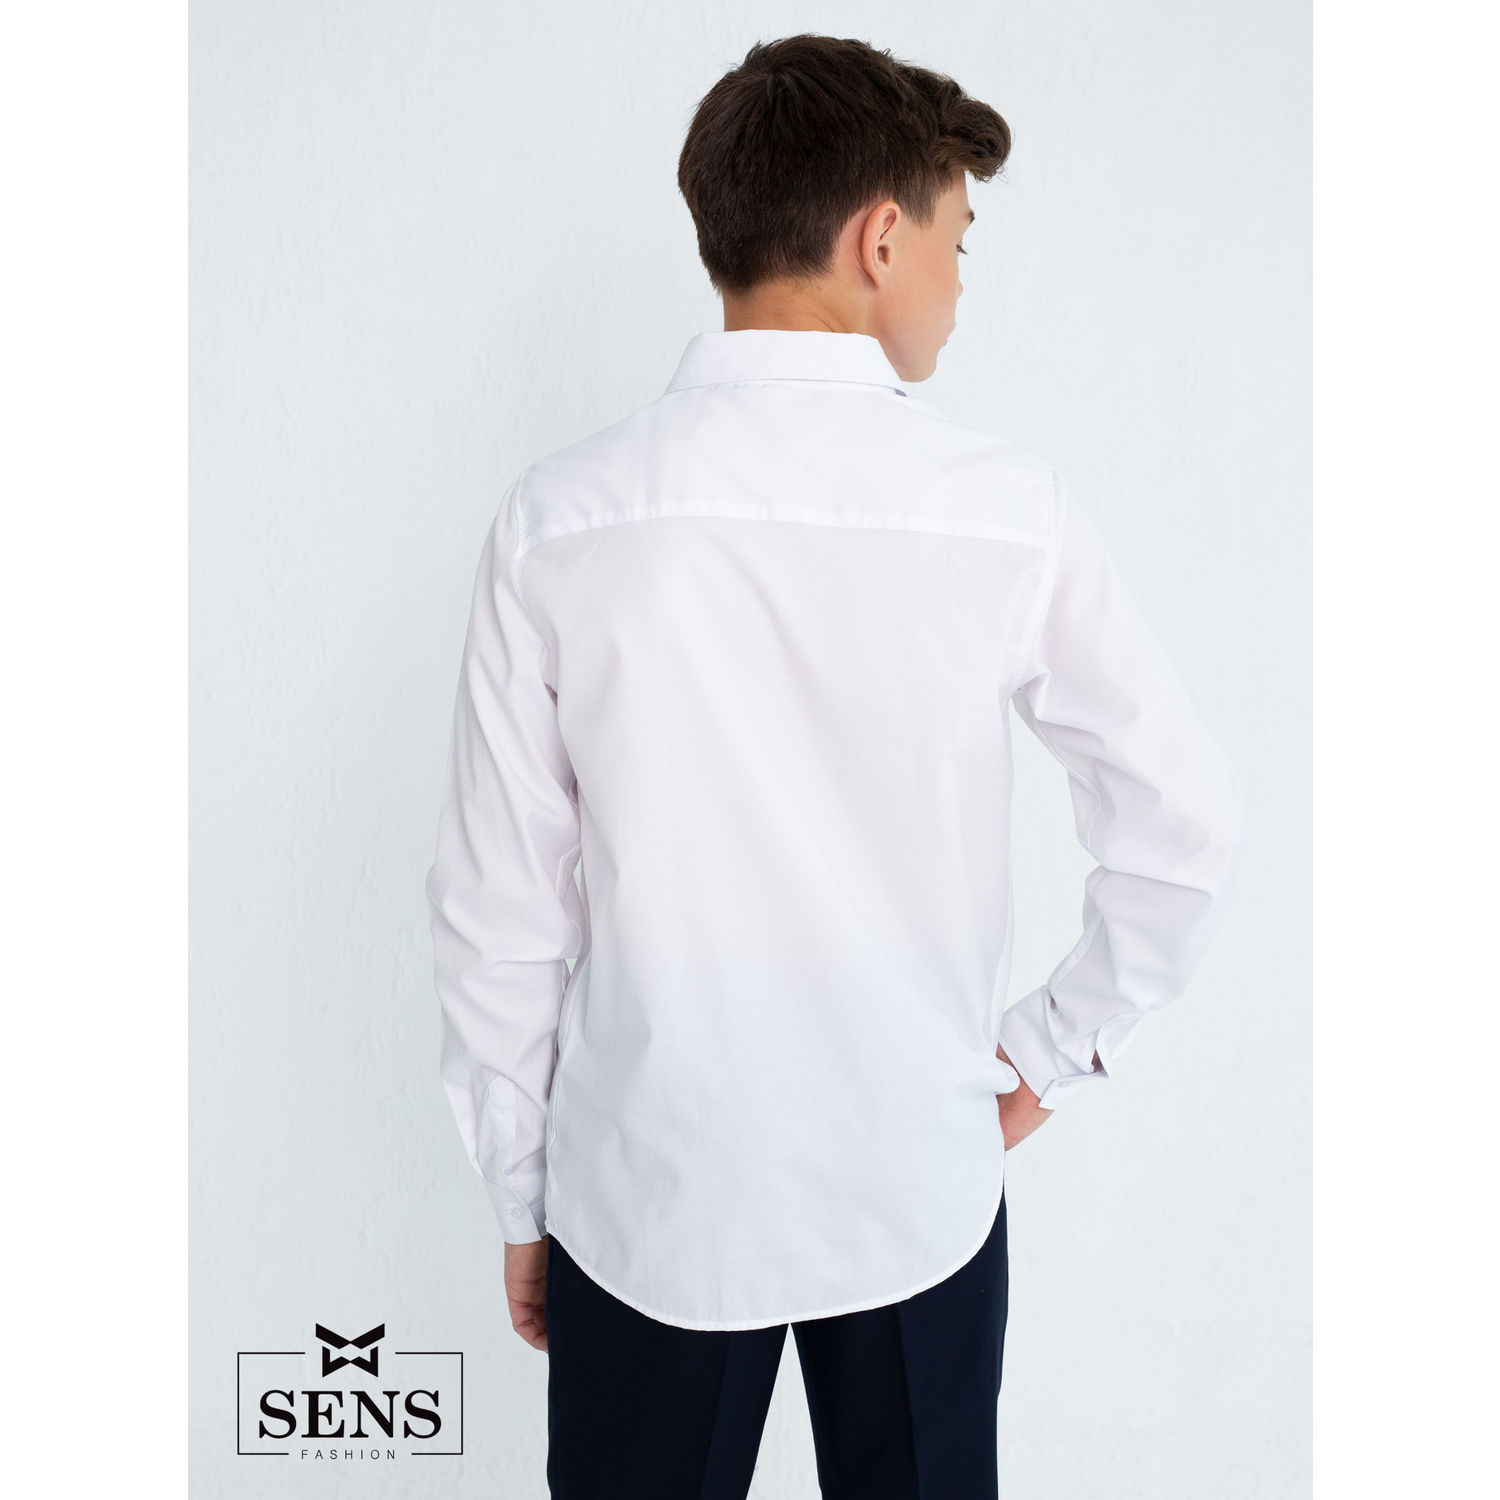 Рубашка Sens Fashion РМП/белый - фото 2